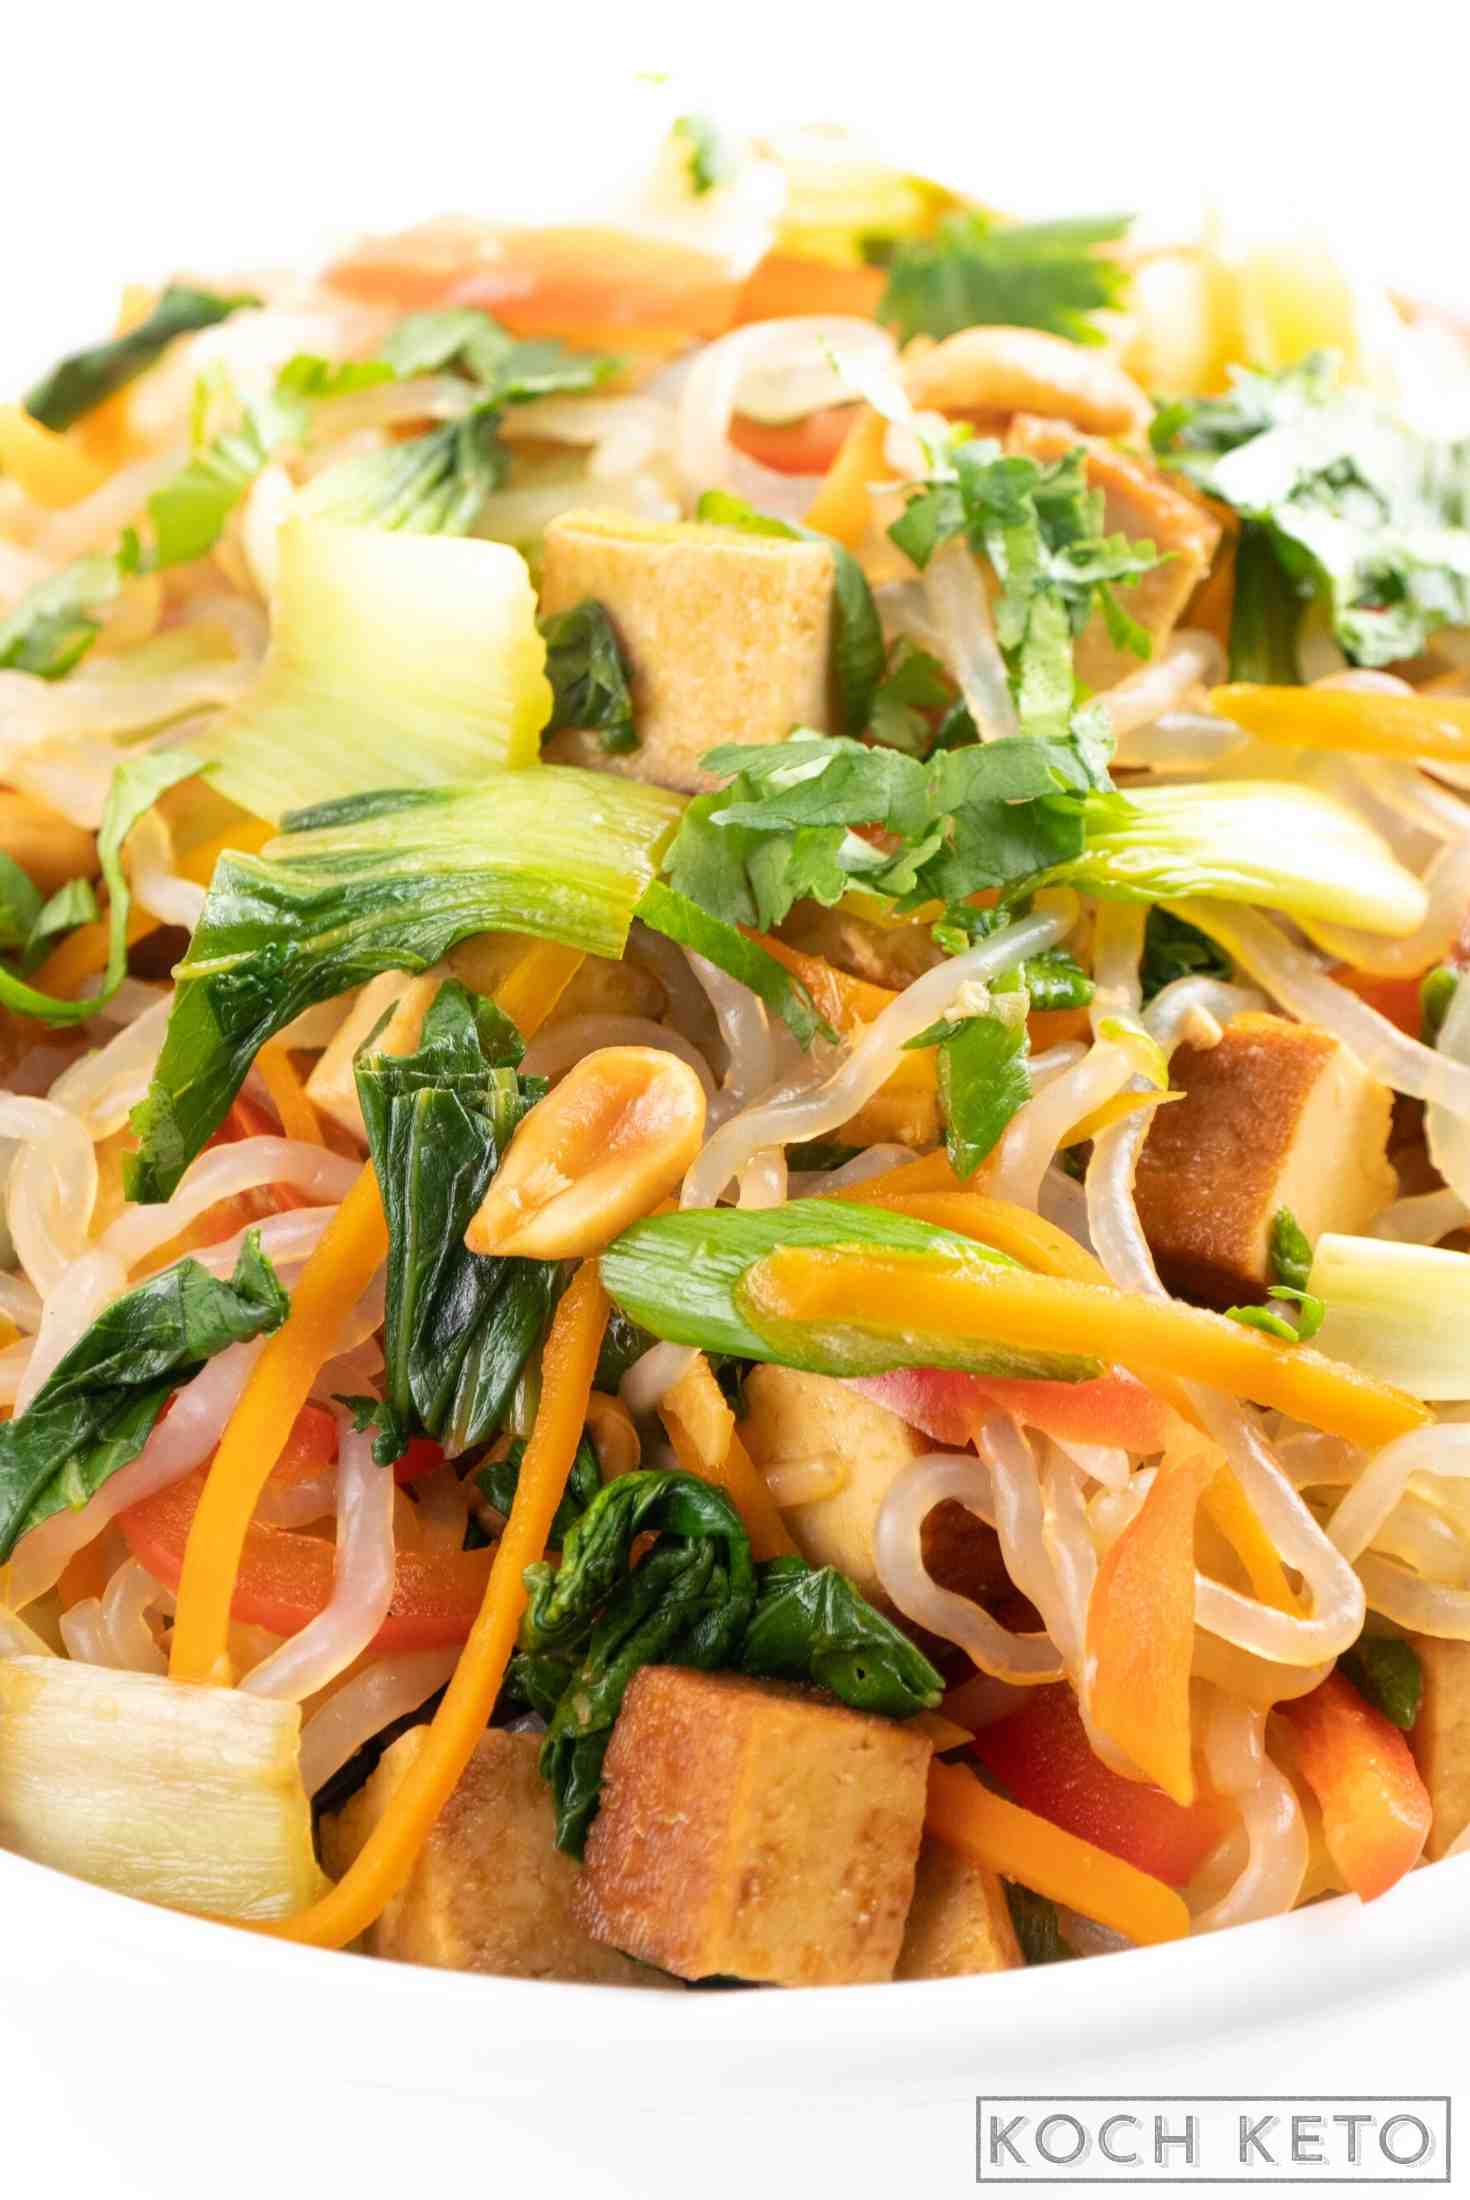 Mega leckerer Low Carb Glasnudelsalat mit Tofu zum veganen Abendessen ohne Kohlenhydrate Image #1